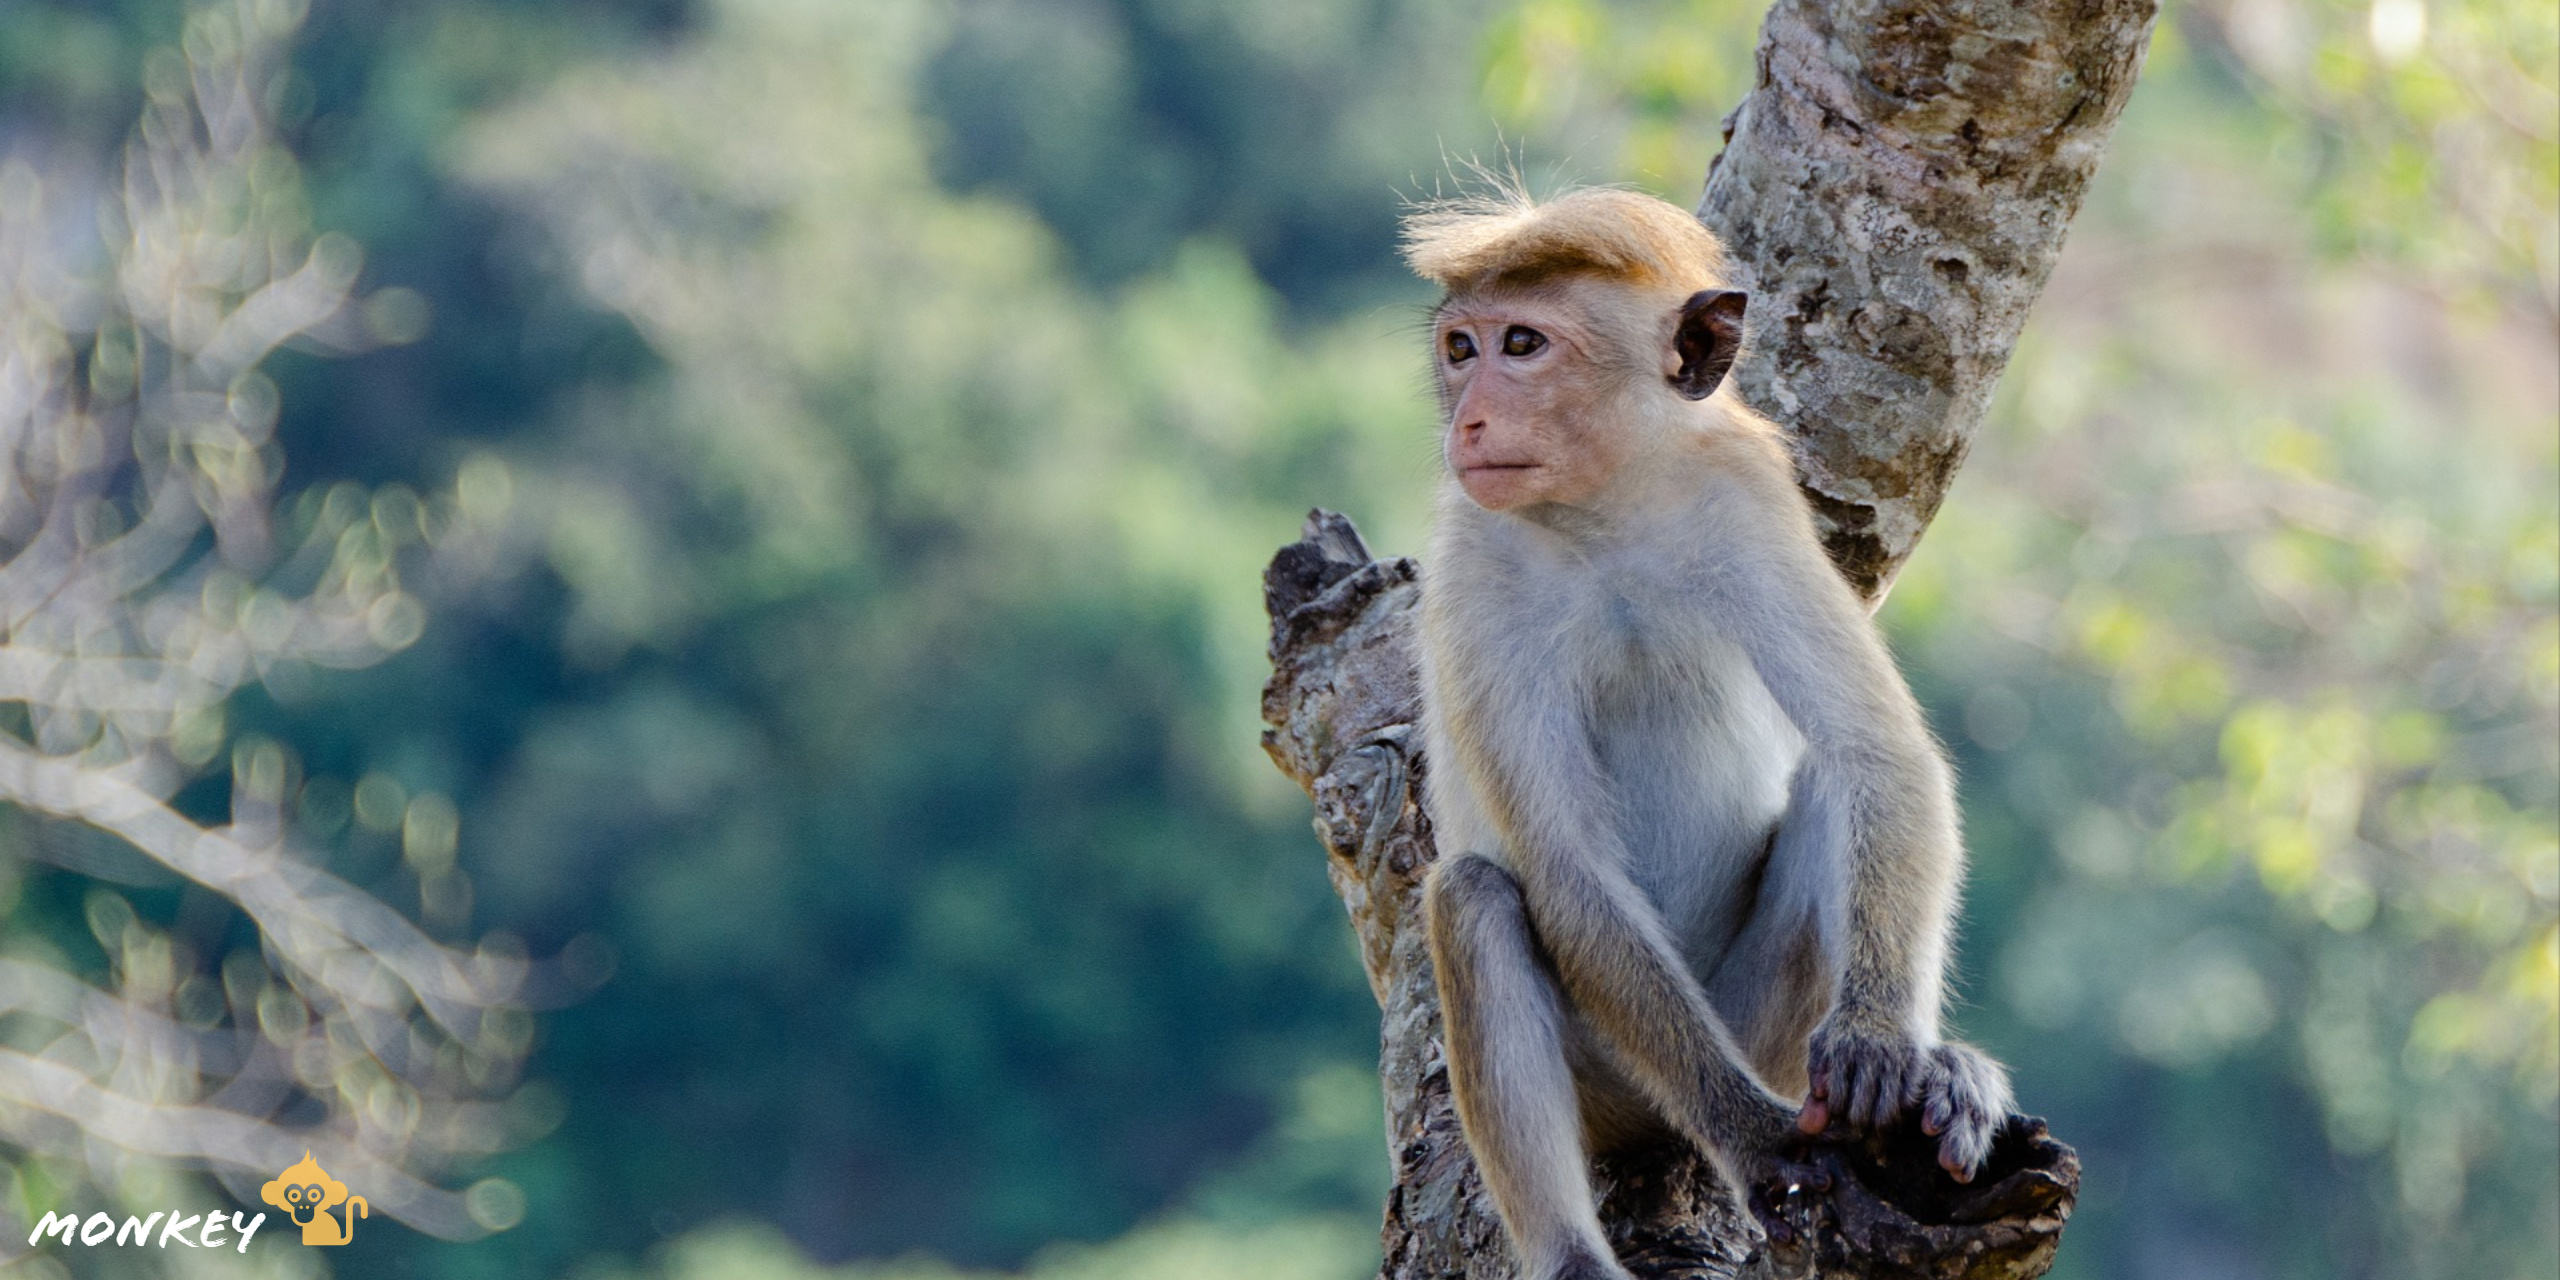 Monkey, HD wallpapers, animal photography, monkey lovers, 2560x1280 Dual Screen Desktop